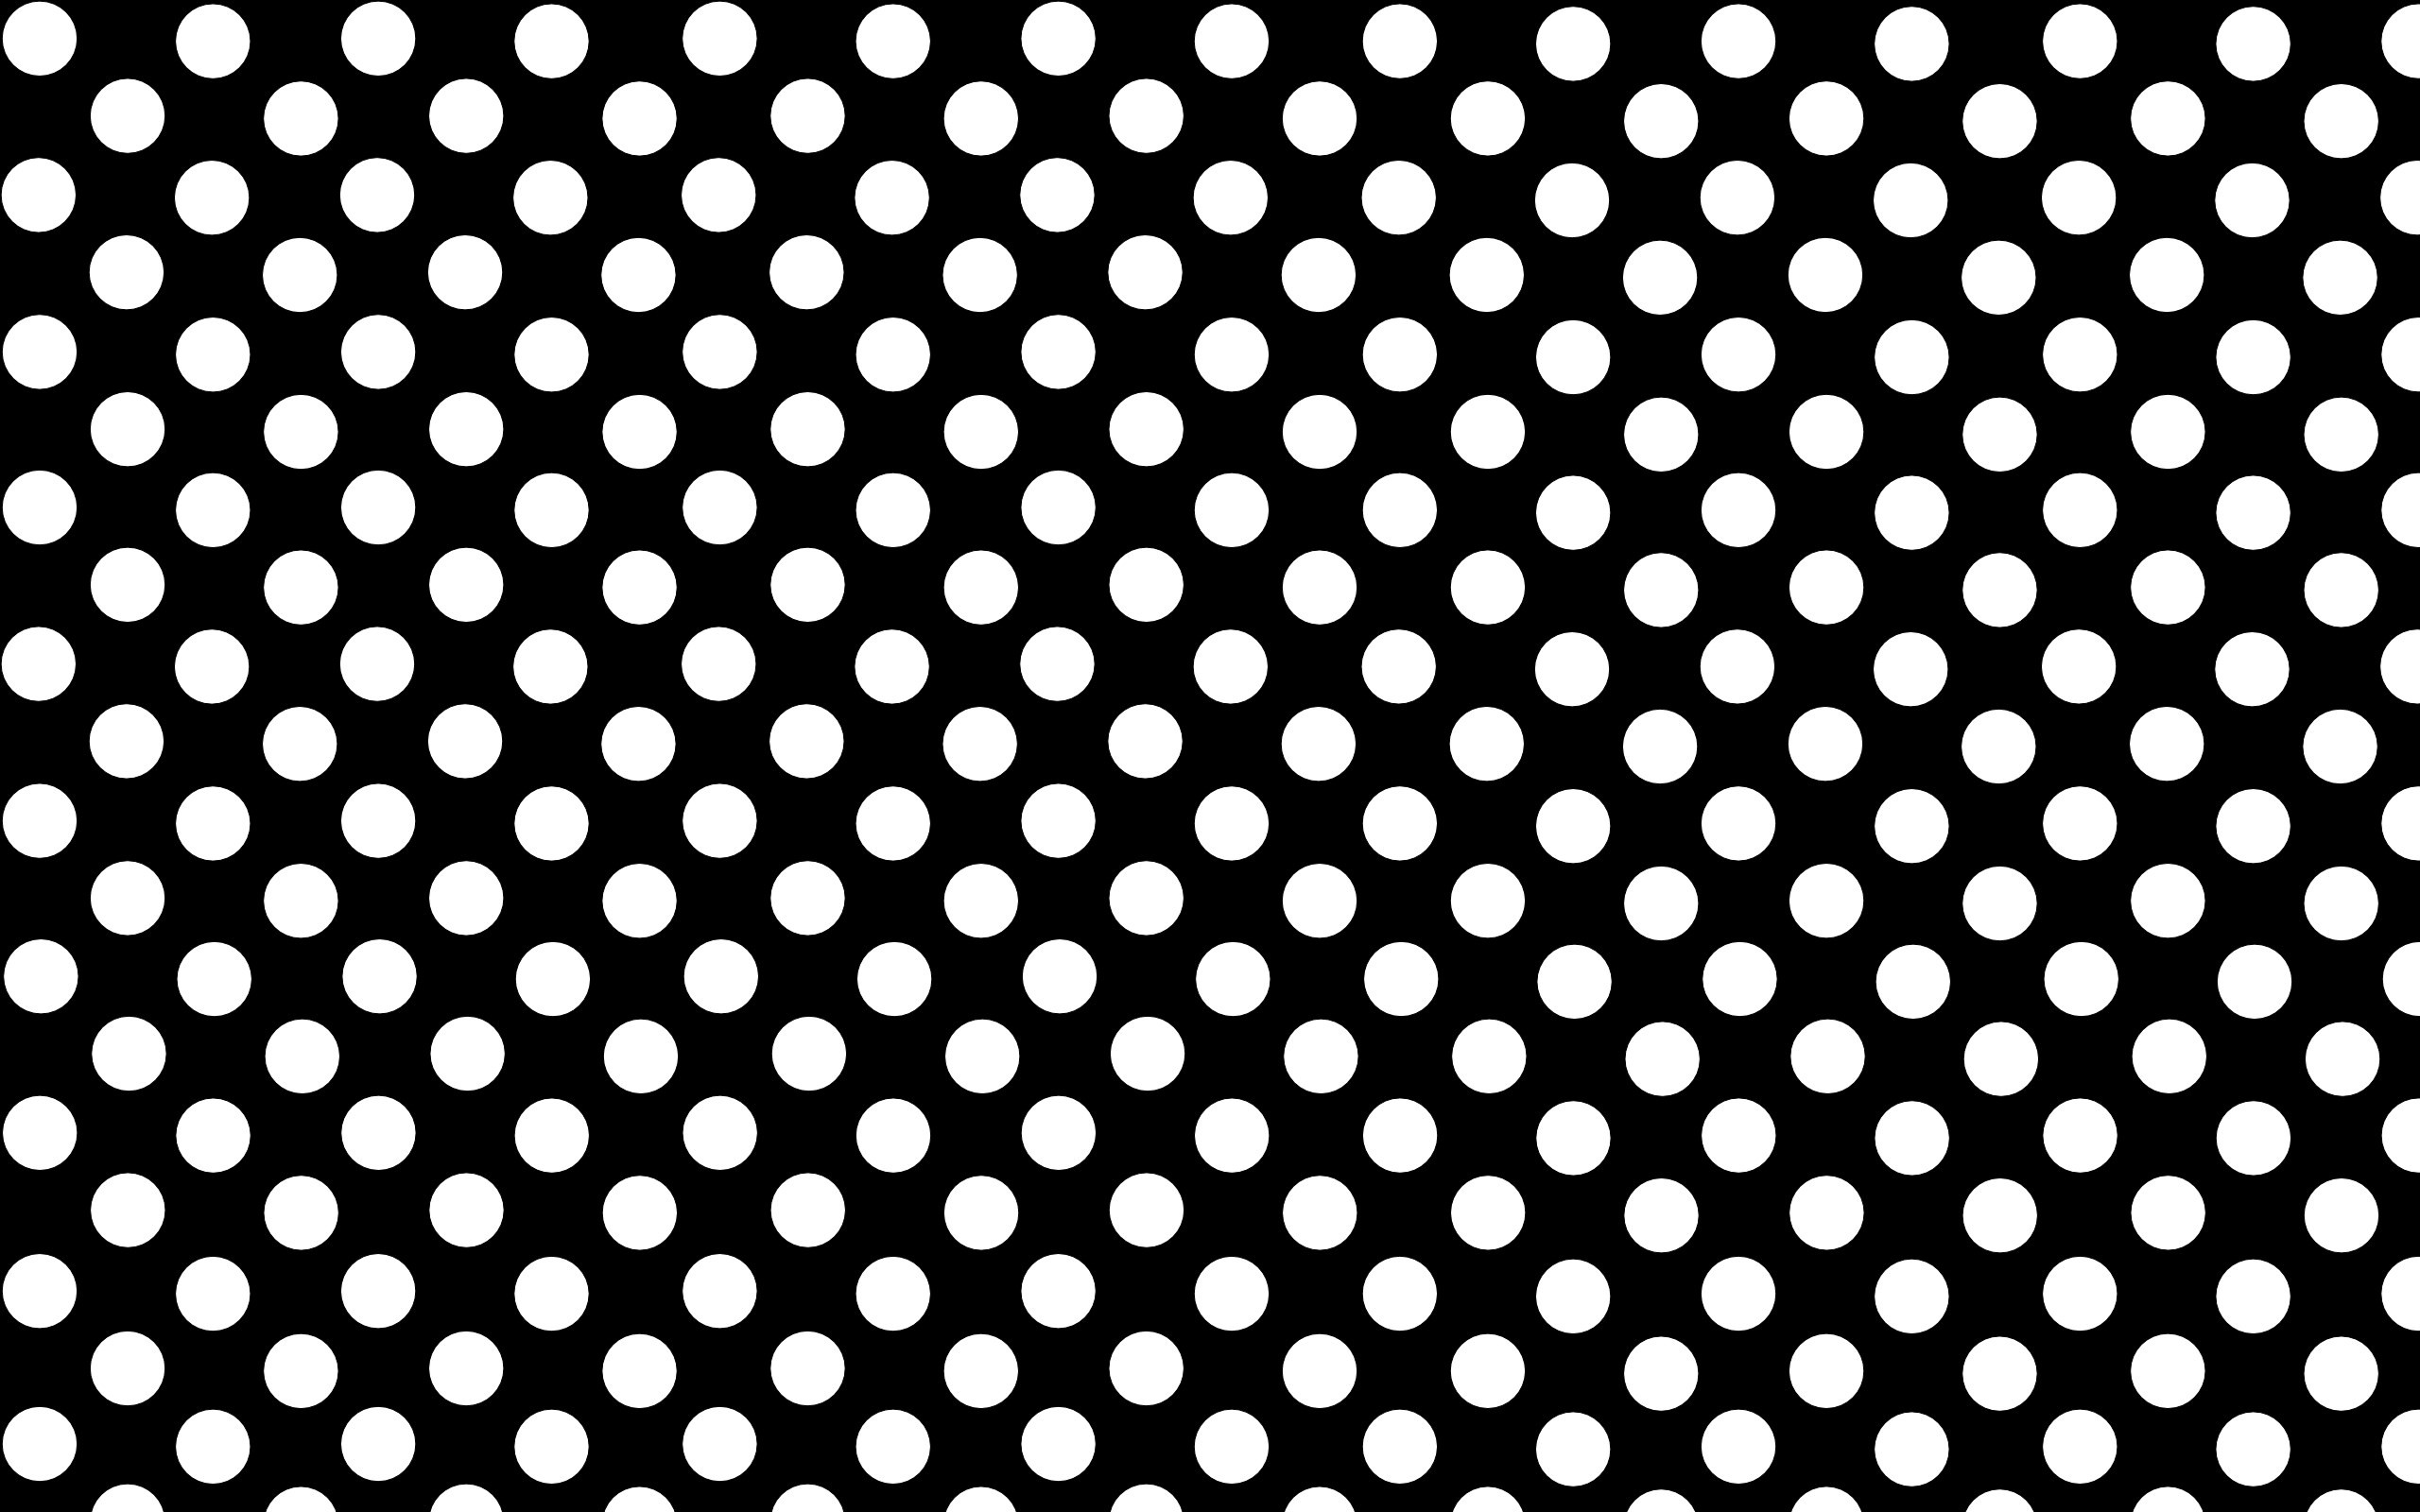 widescreen hd winter polka dot – polka dot category